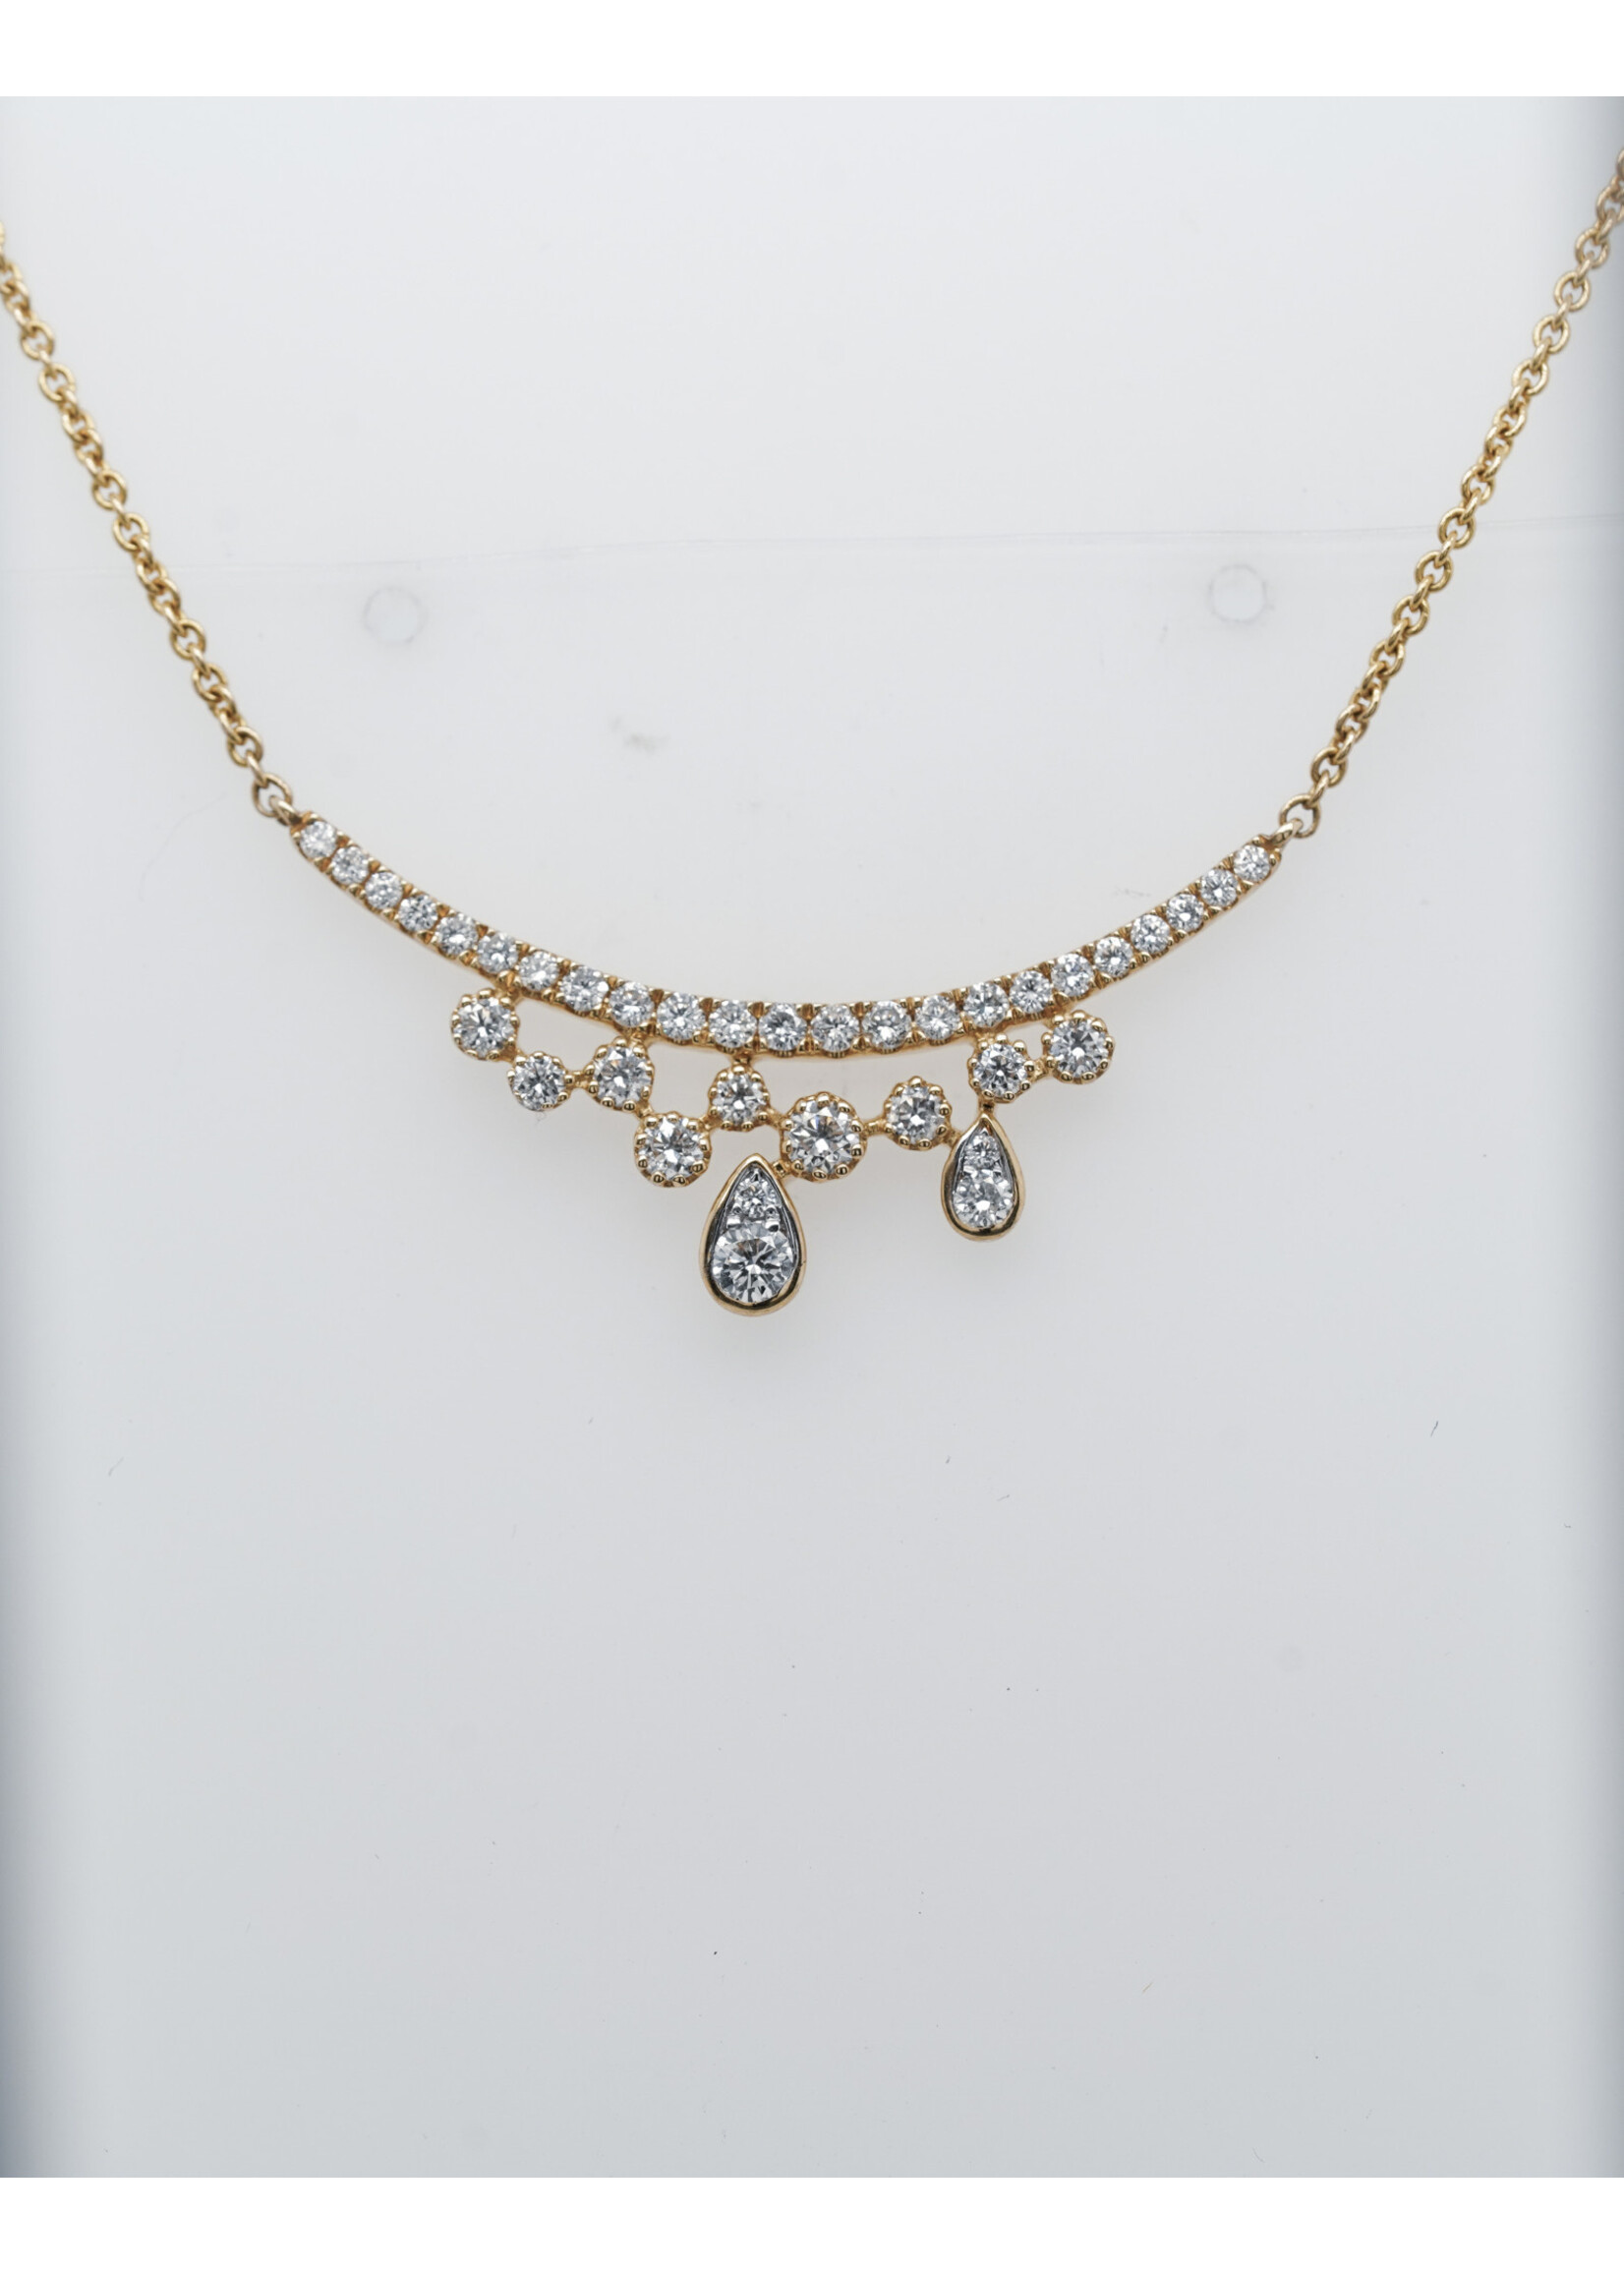 14KY 2.9g .49ctw Diamond Fancy Necklace 16-18"